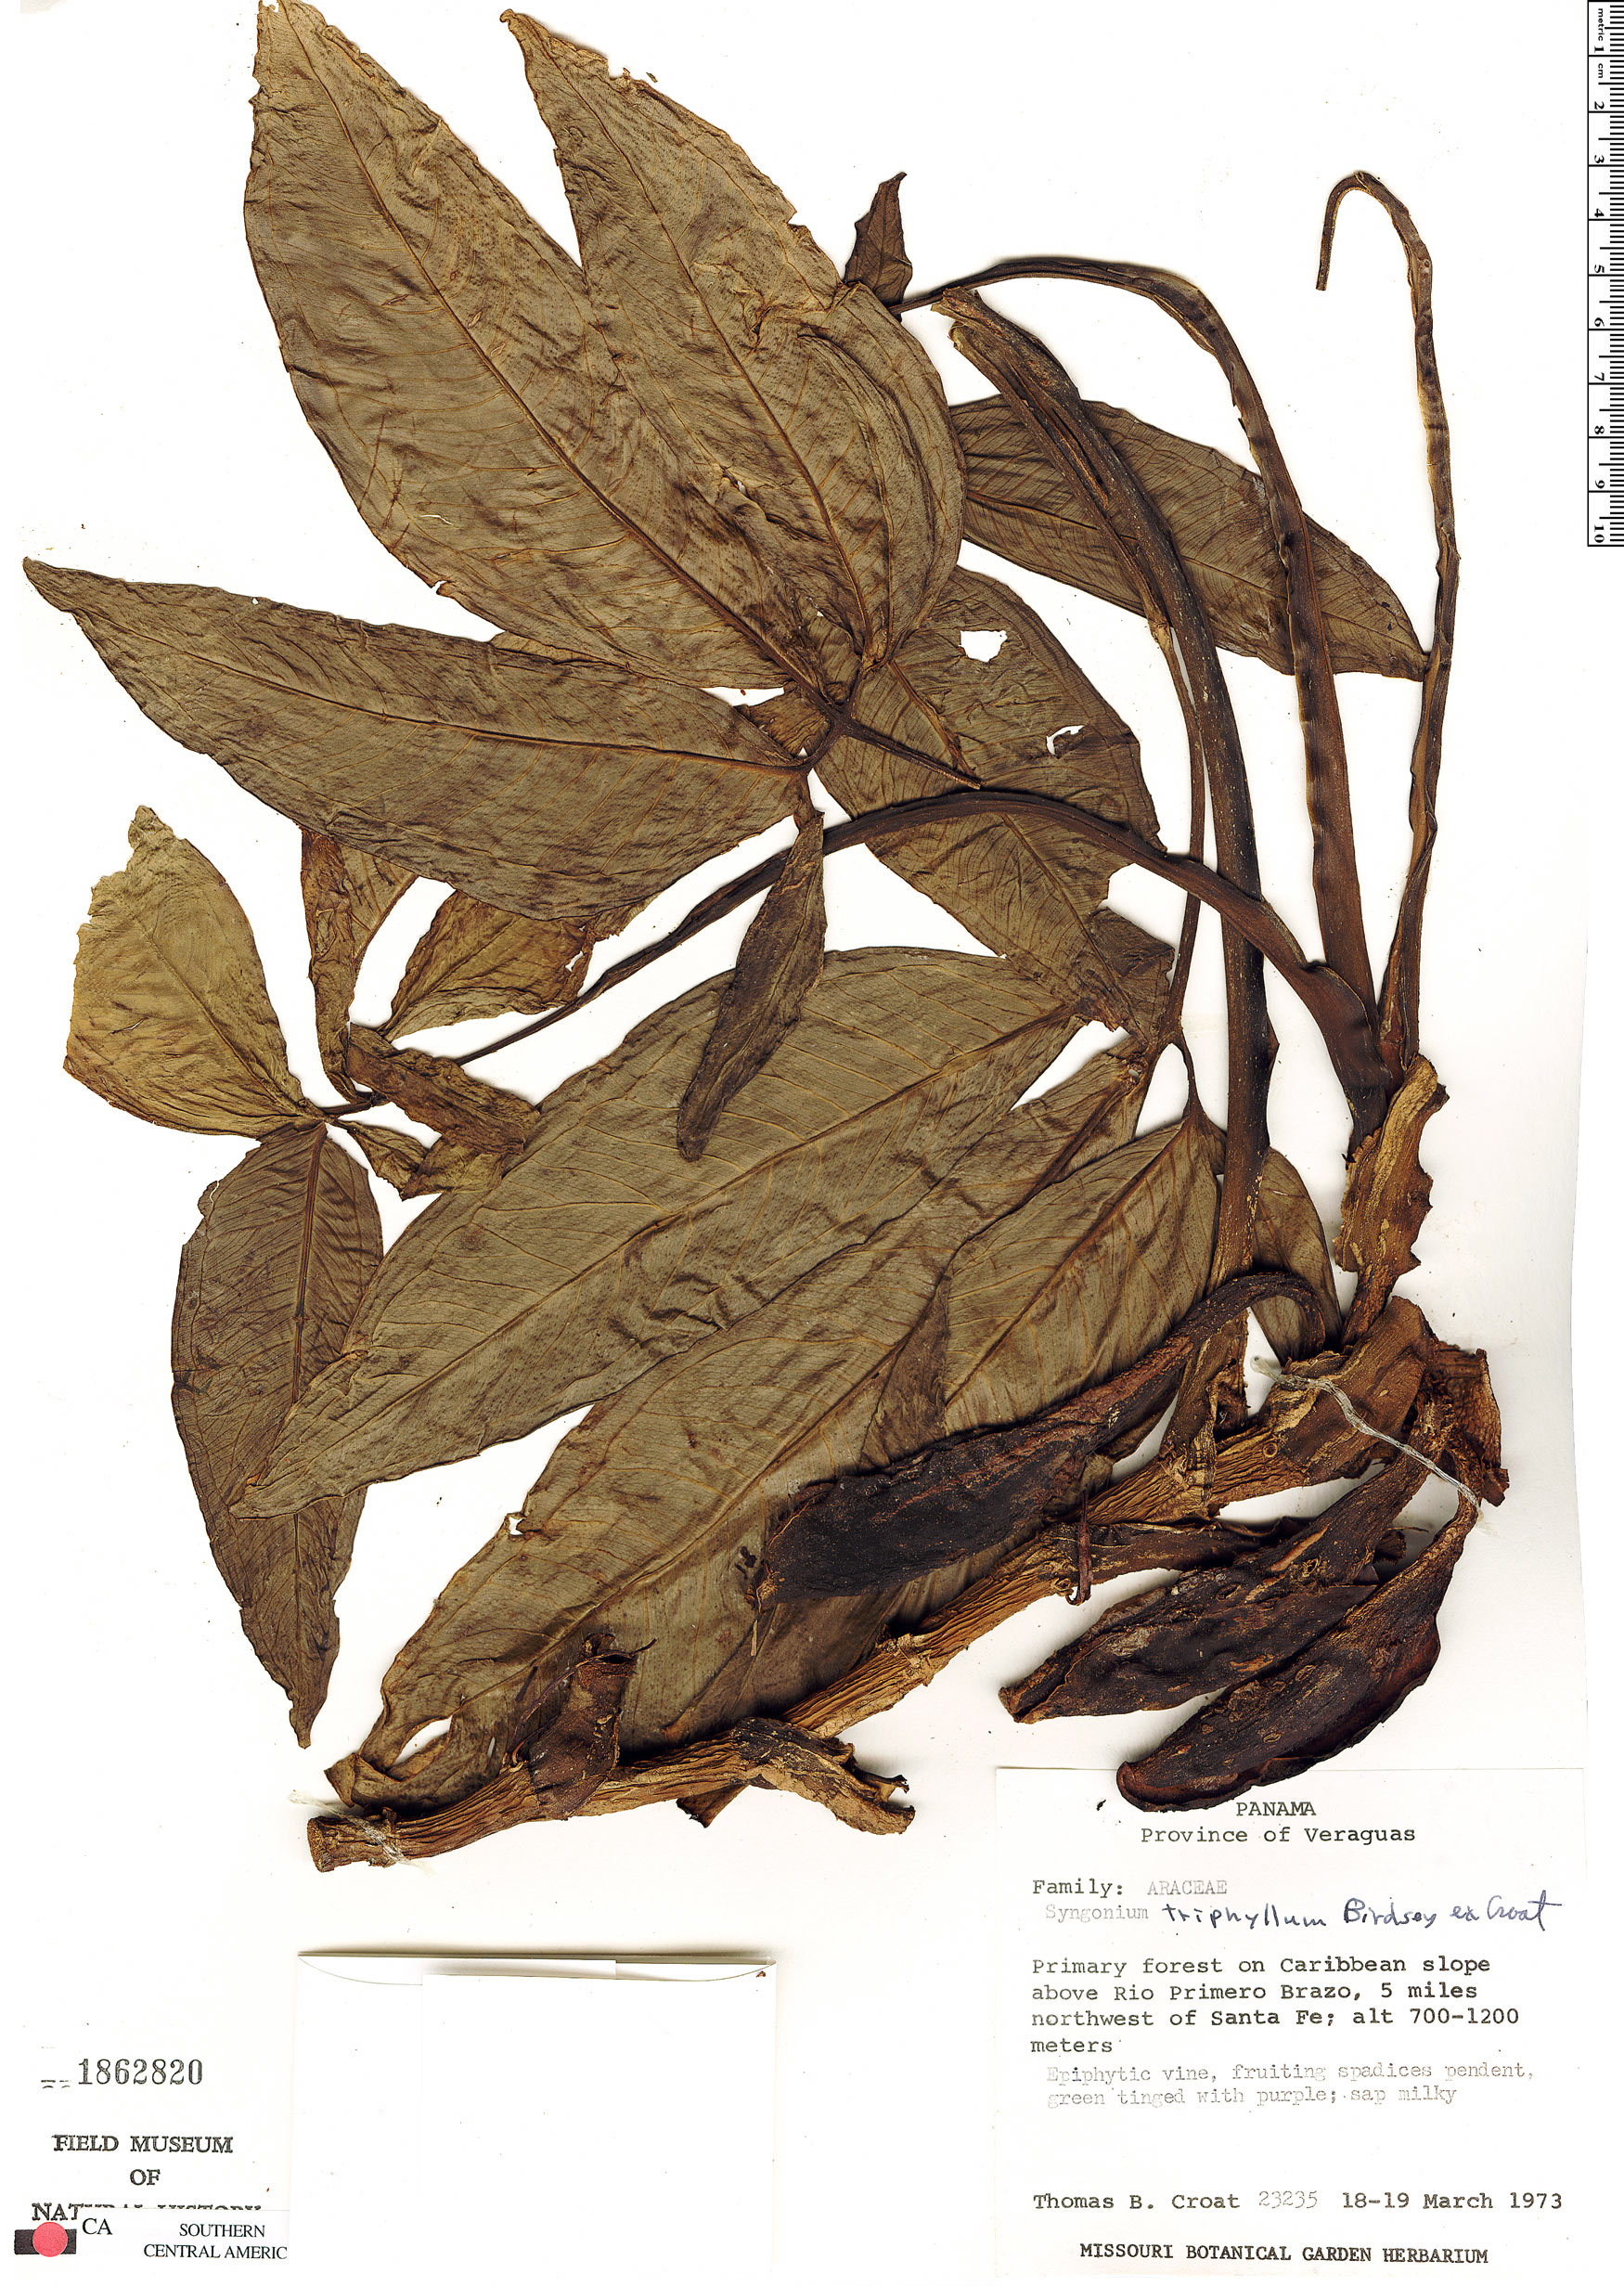 Syngonium triphyllum image